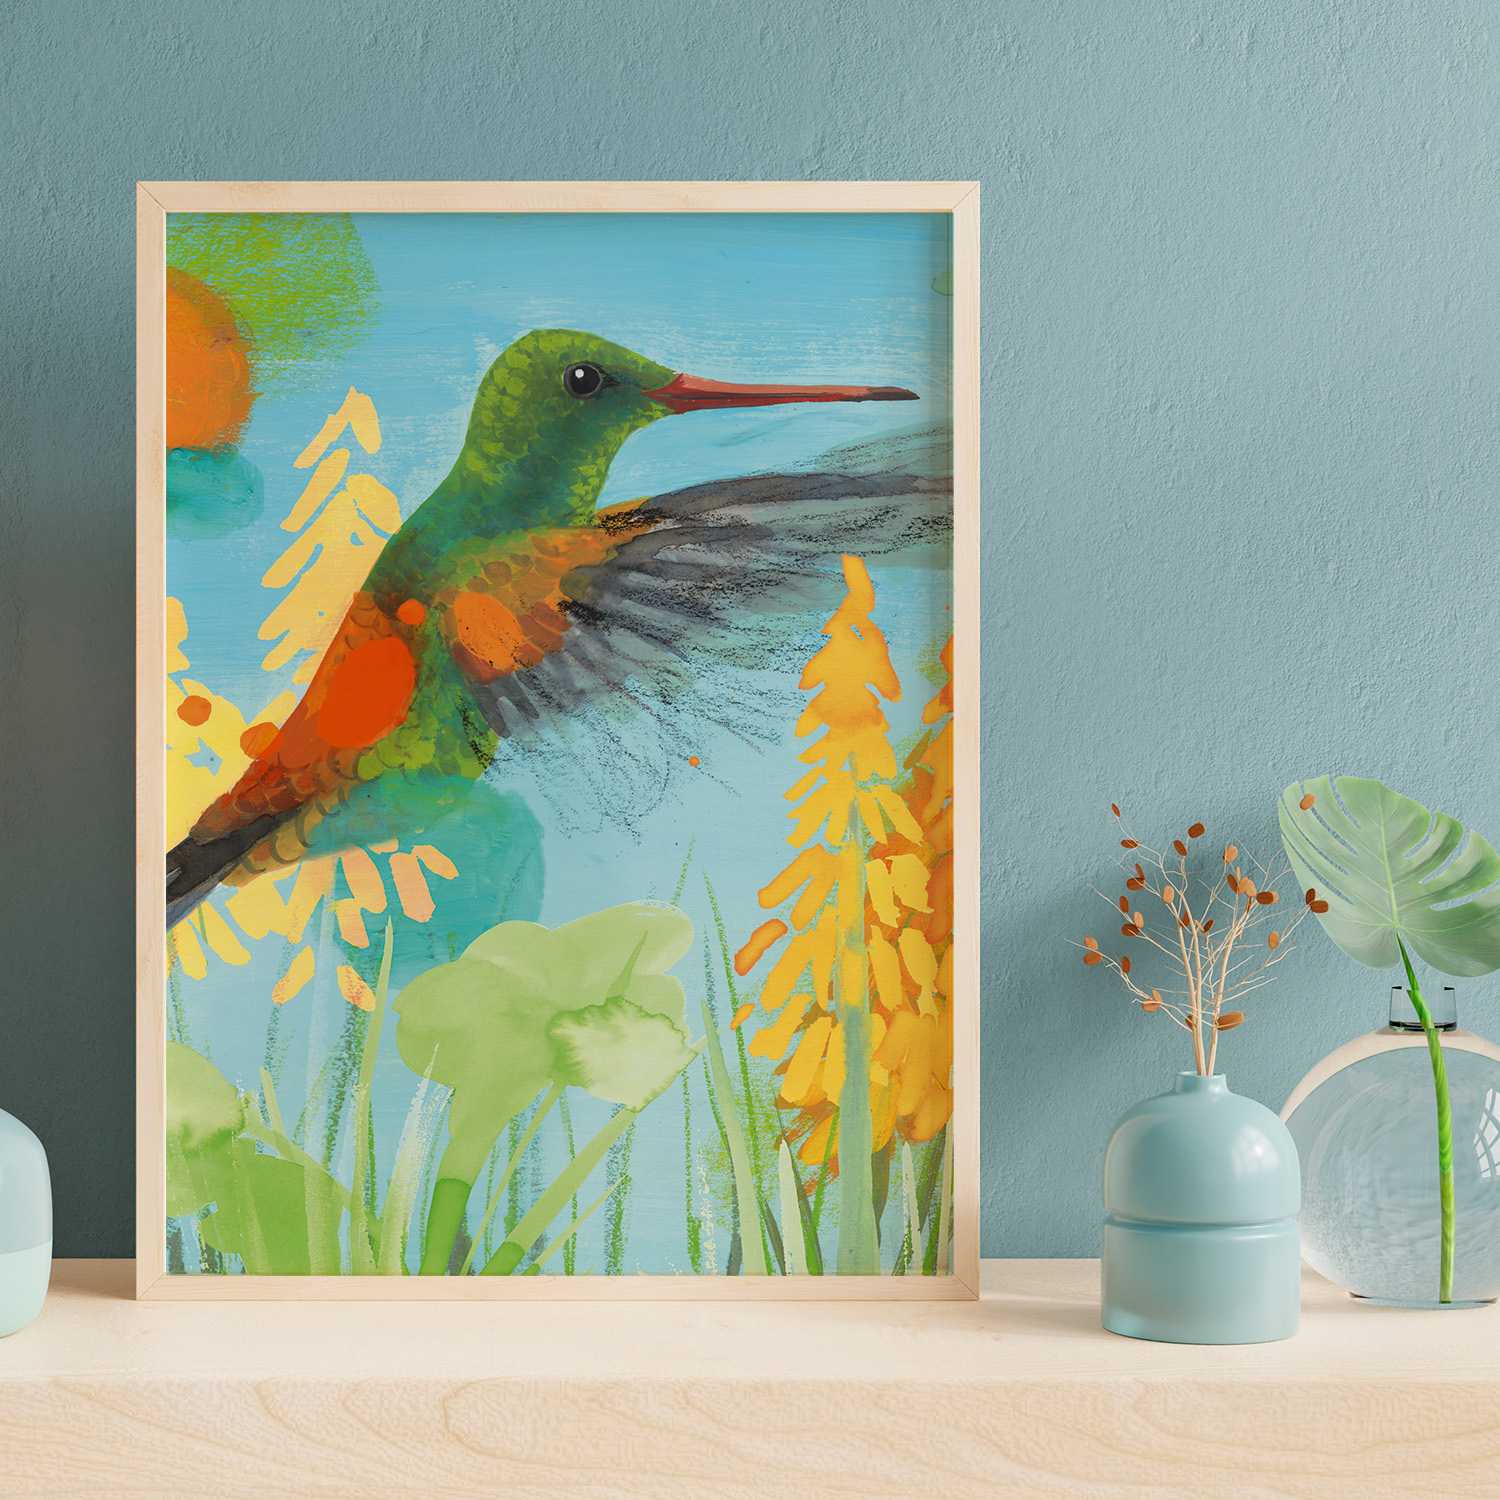 print of a Copper-rumped Hummingbird Jeanne Melchels